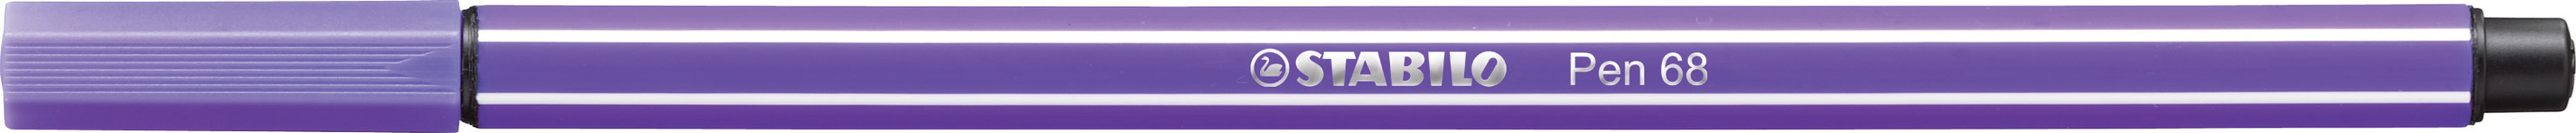 STABILO Stylo Fibre Pen 68 1mm 68/55 violet